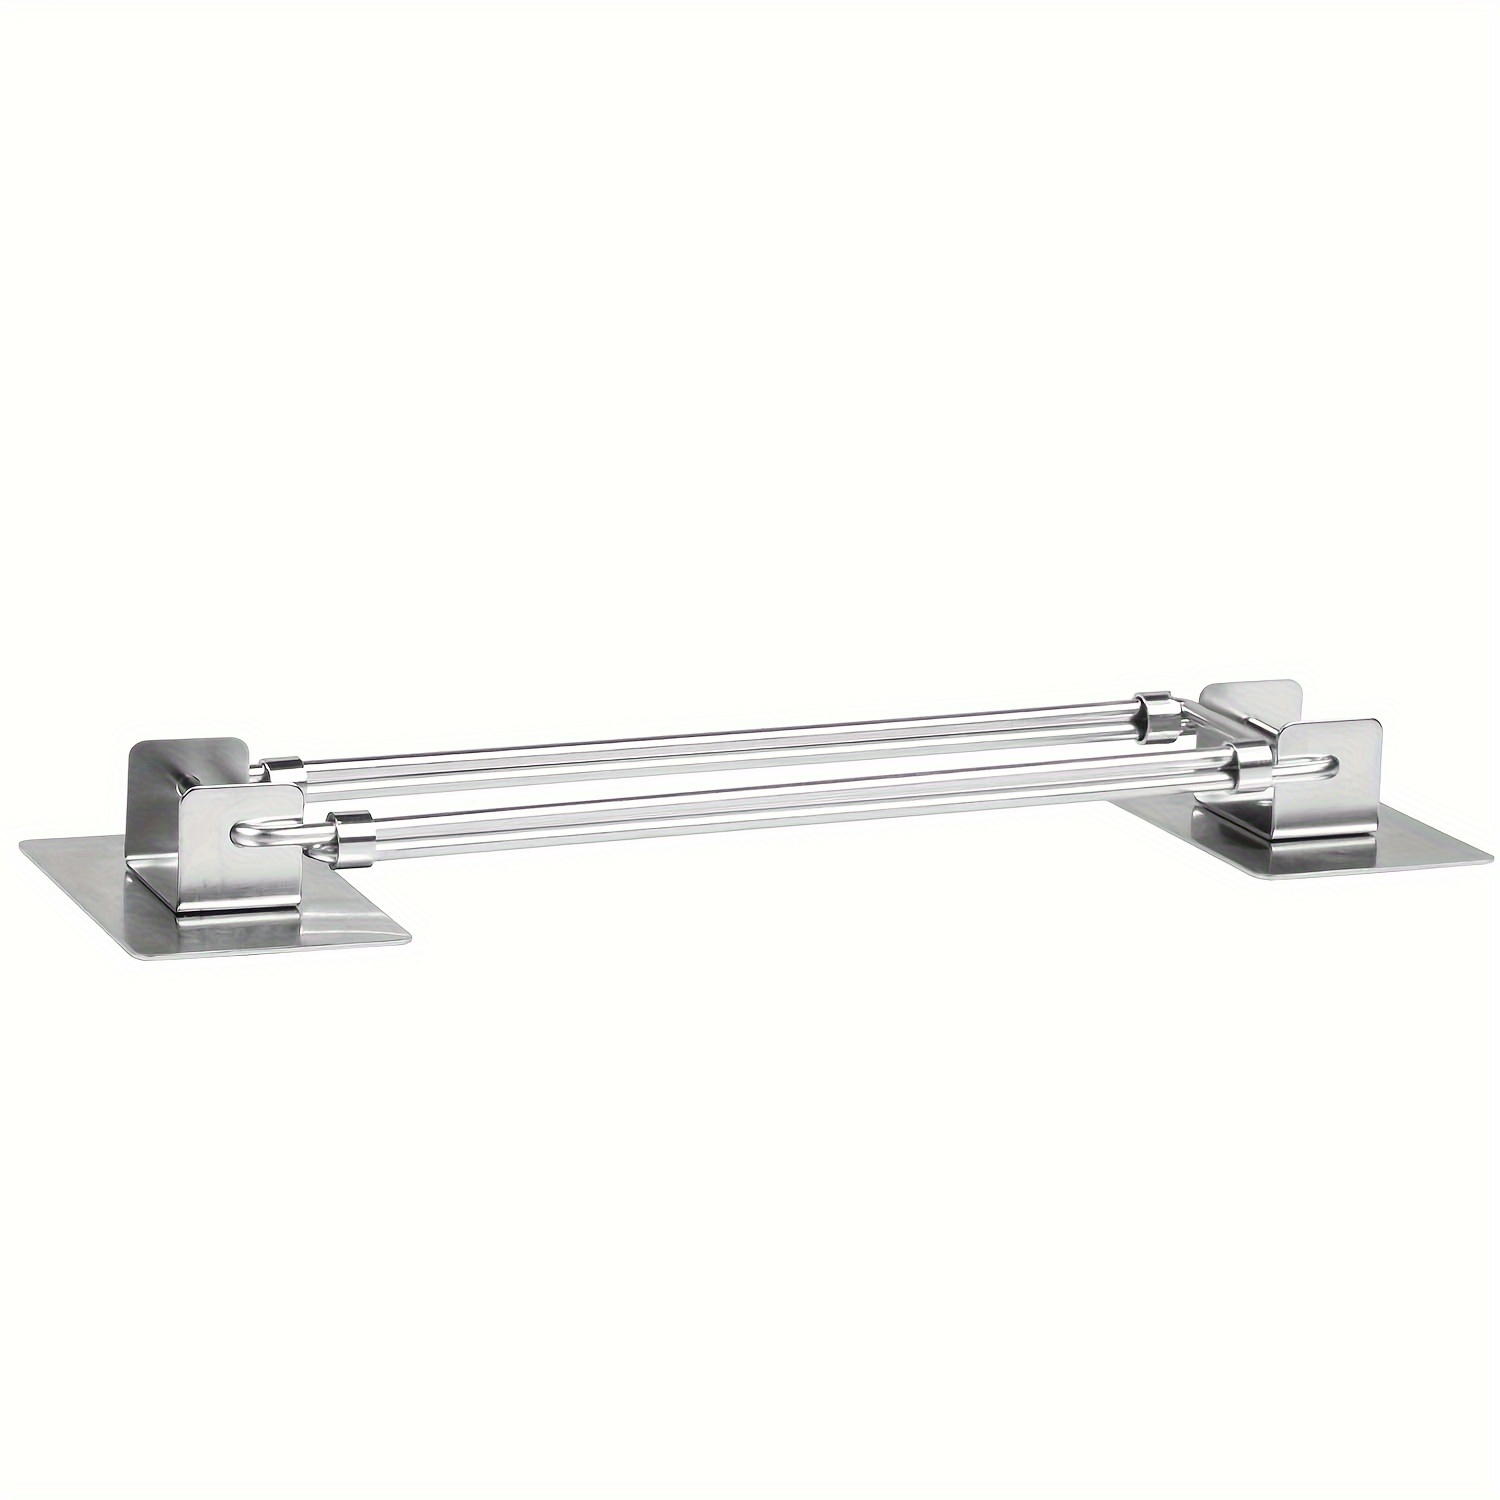 2Pcs RV Shower Corner Storage Bar- Adjustable Stainless Steel Rod